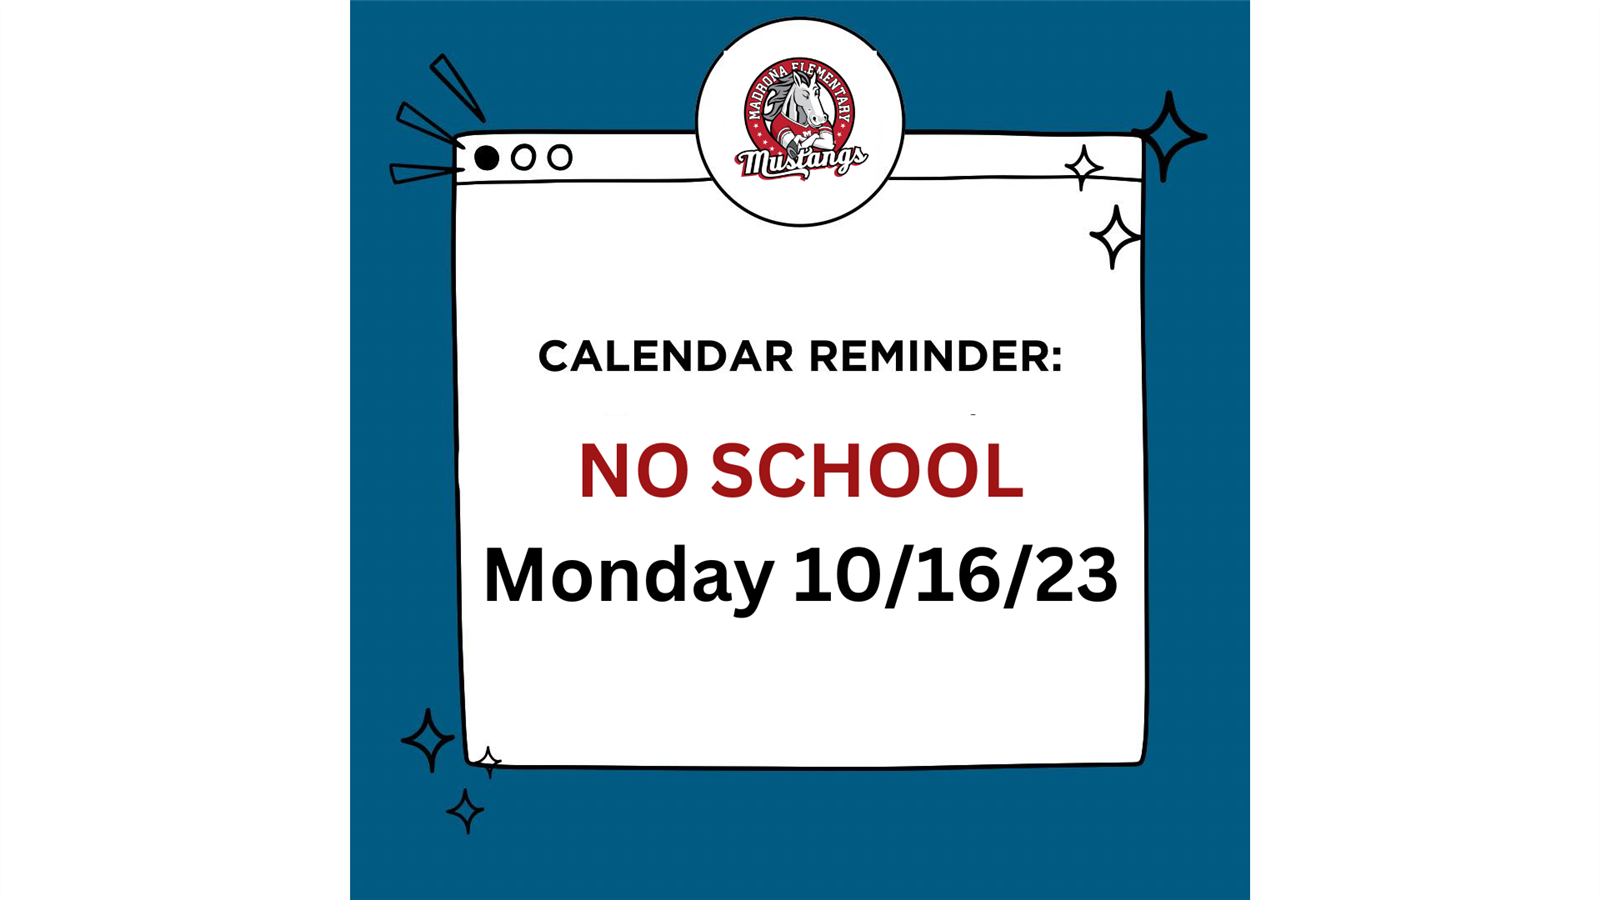  No School on Monday 10/16/23